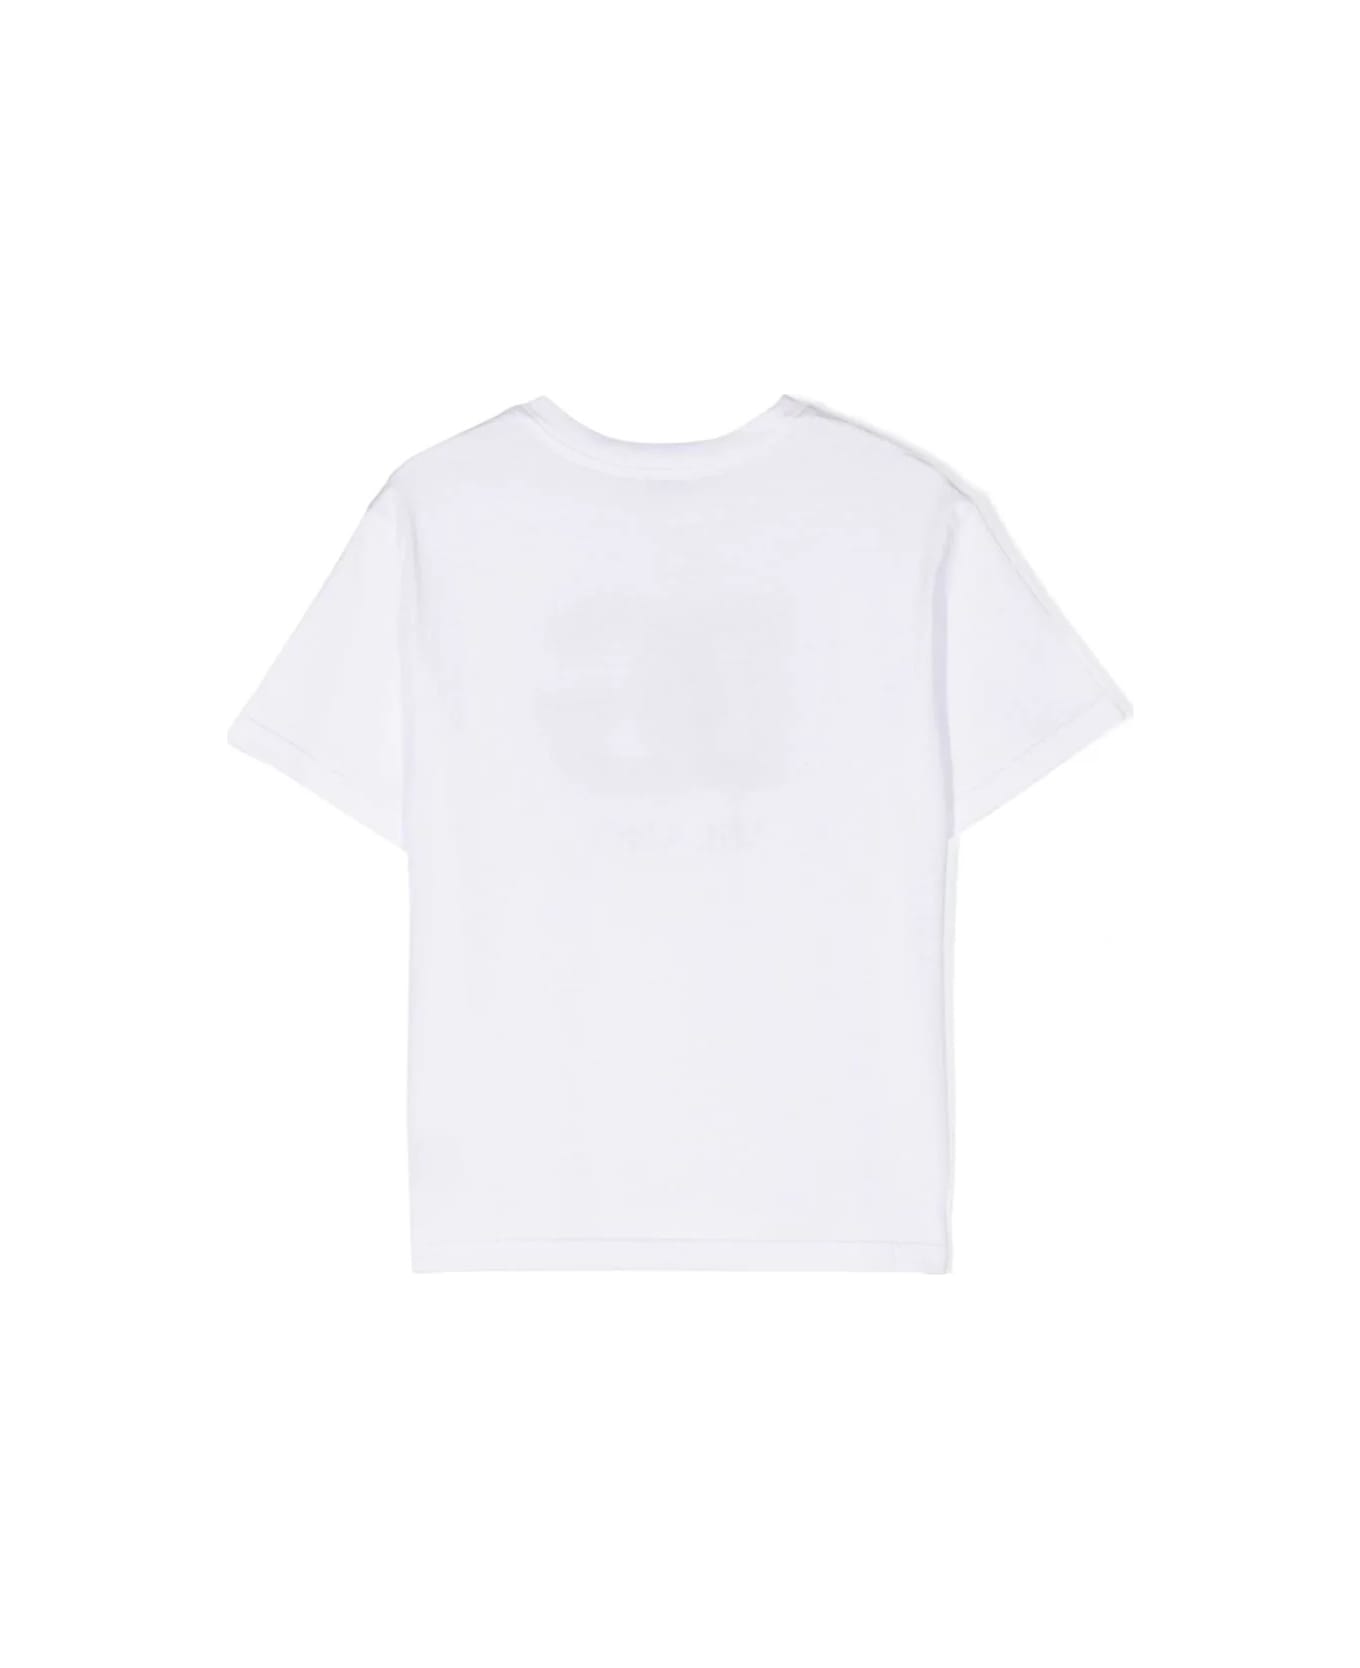 Dolce & Gabbana White T-shirt With Dg Logo Print - White